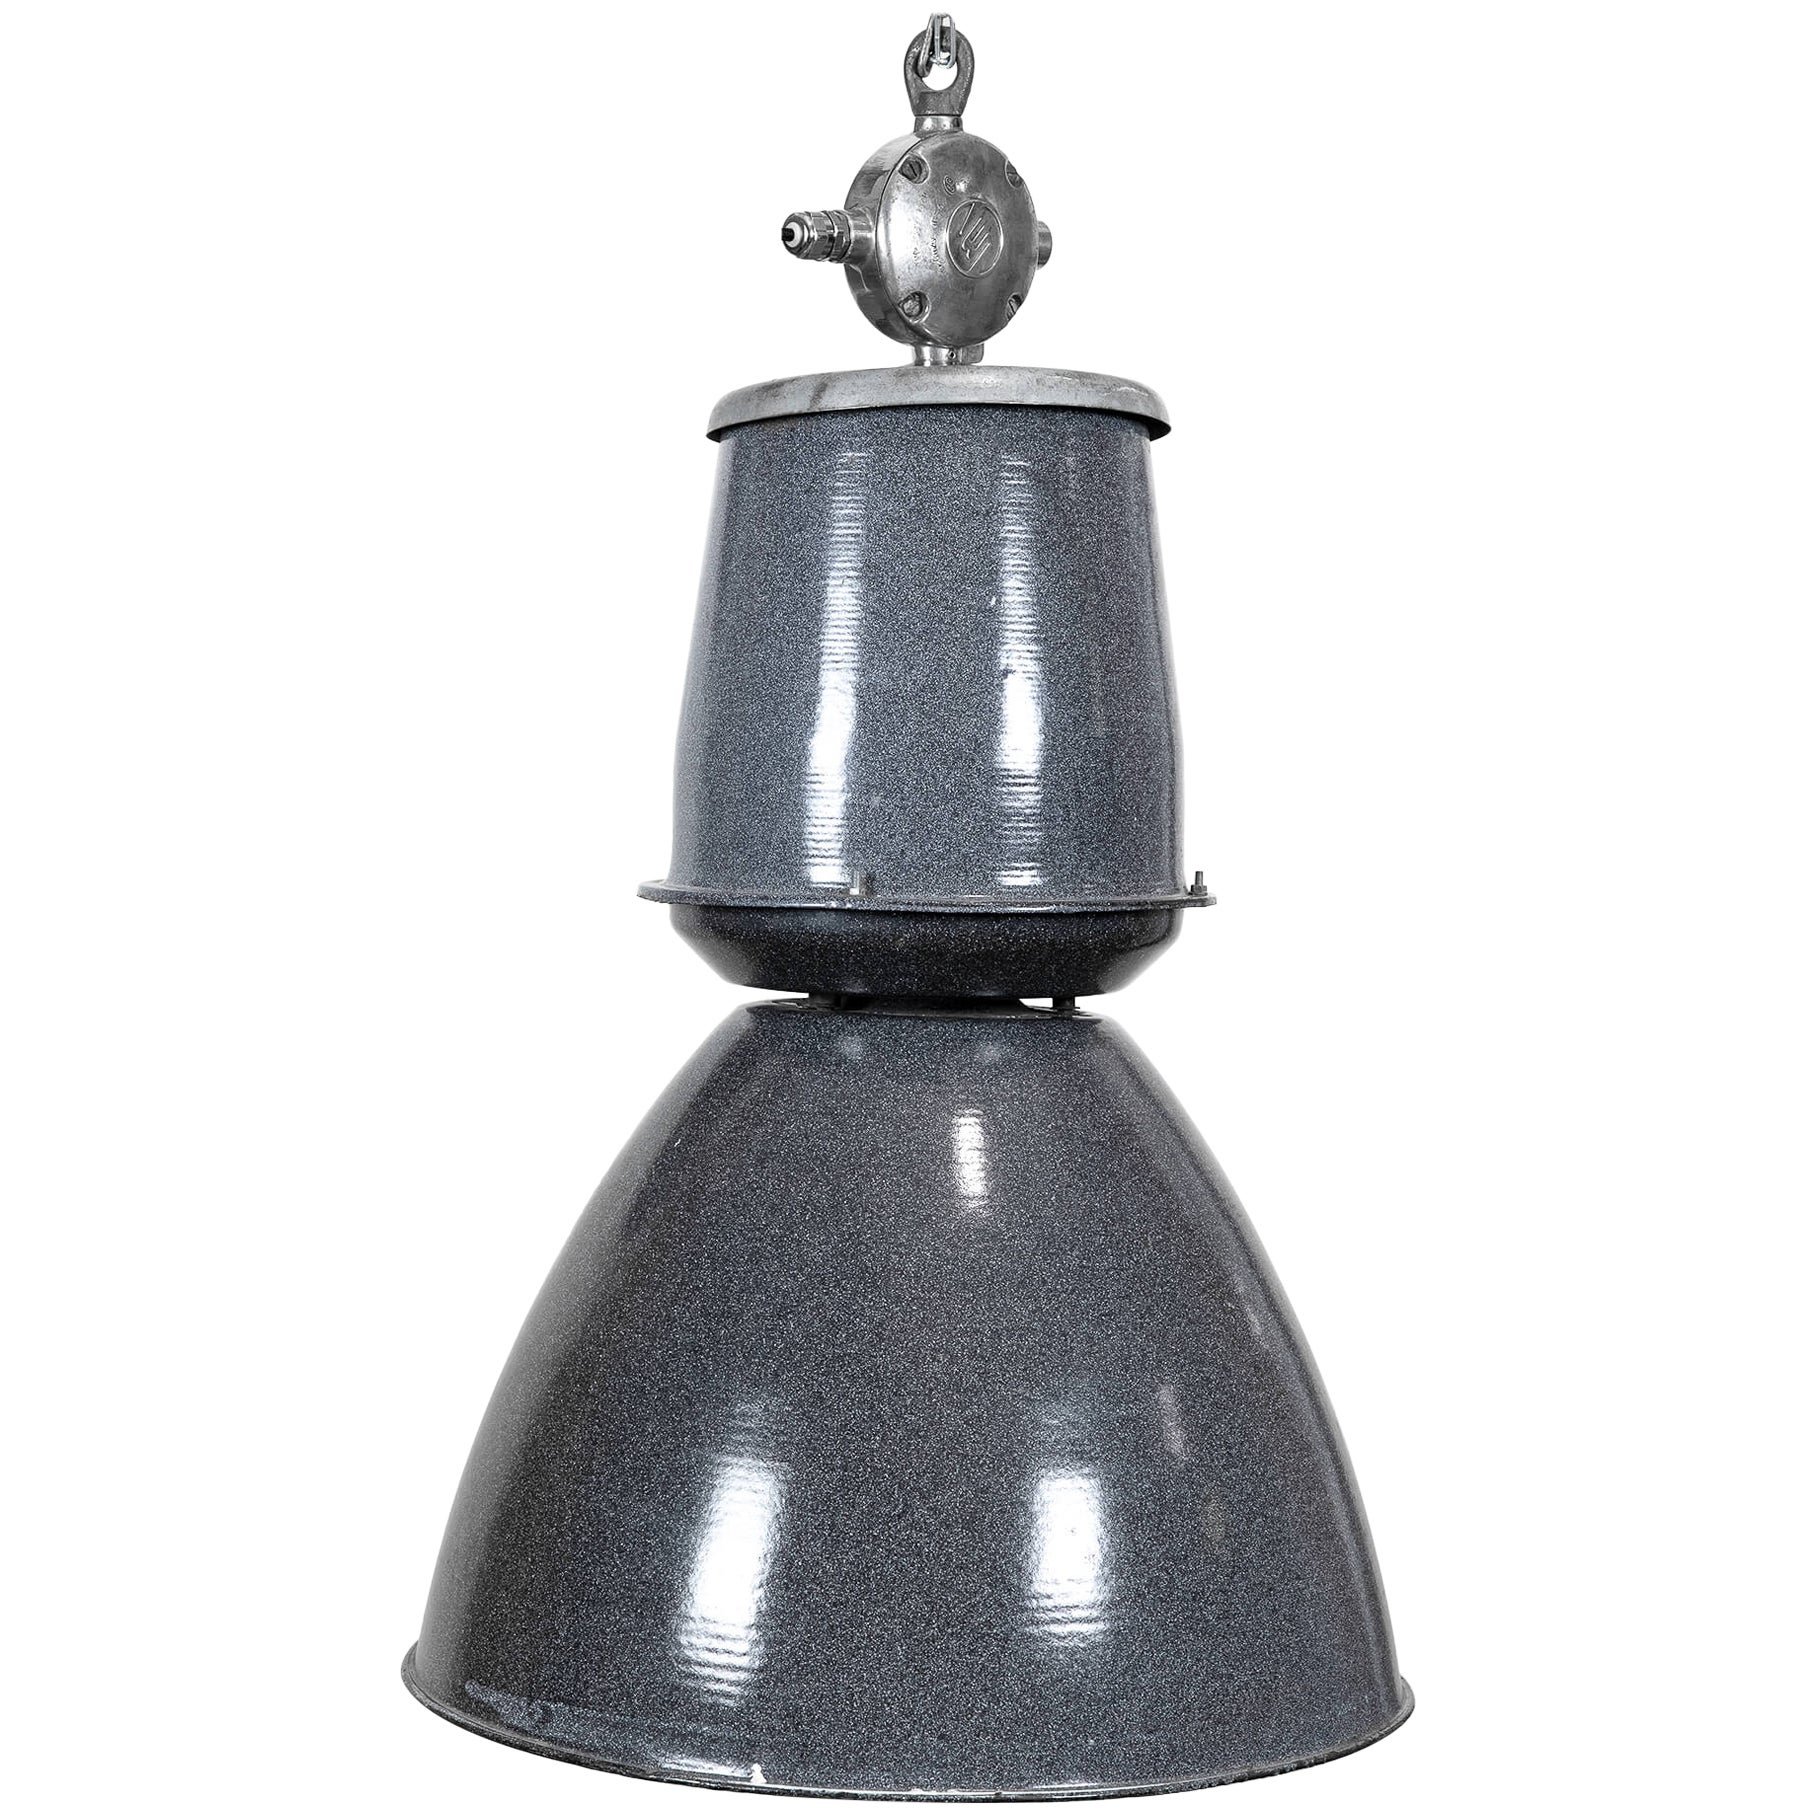 Vintage EFC Fabriklampe, ca. 1950er Jahre